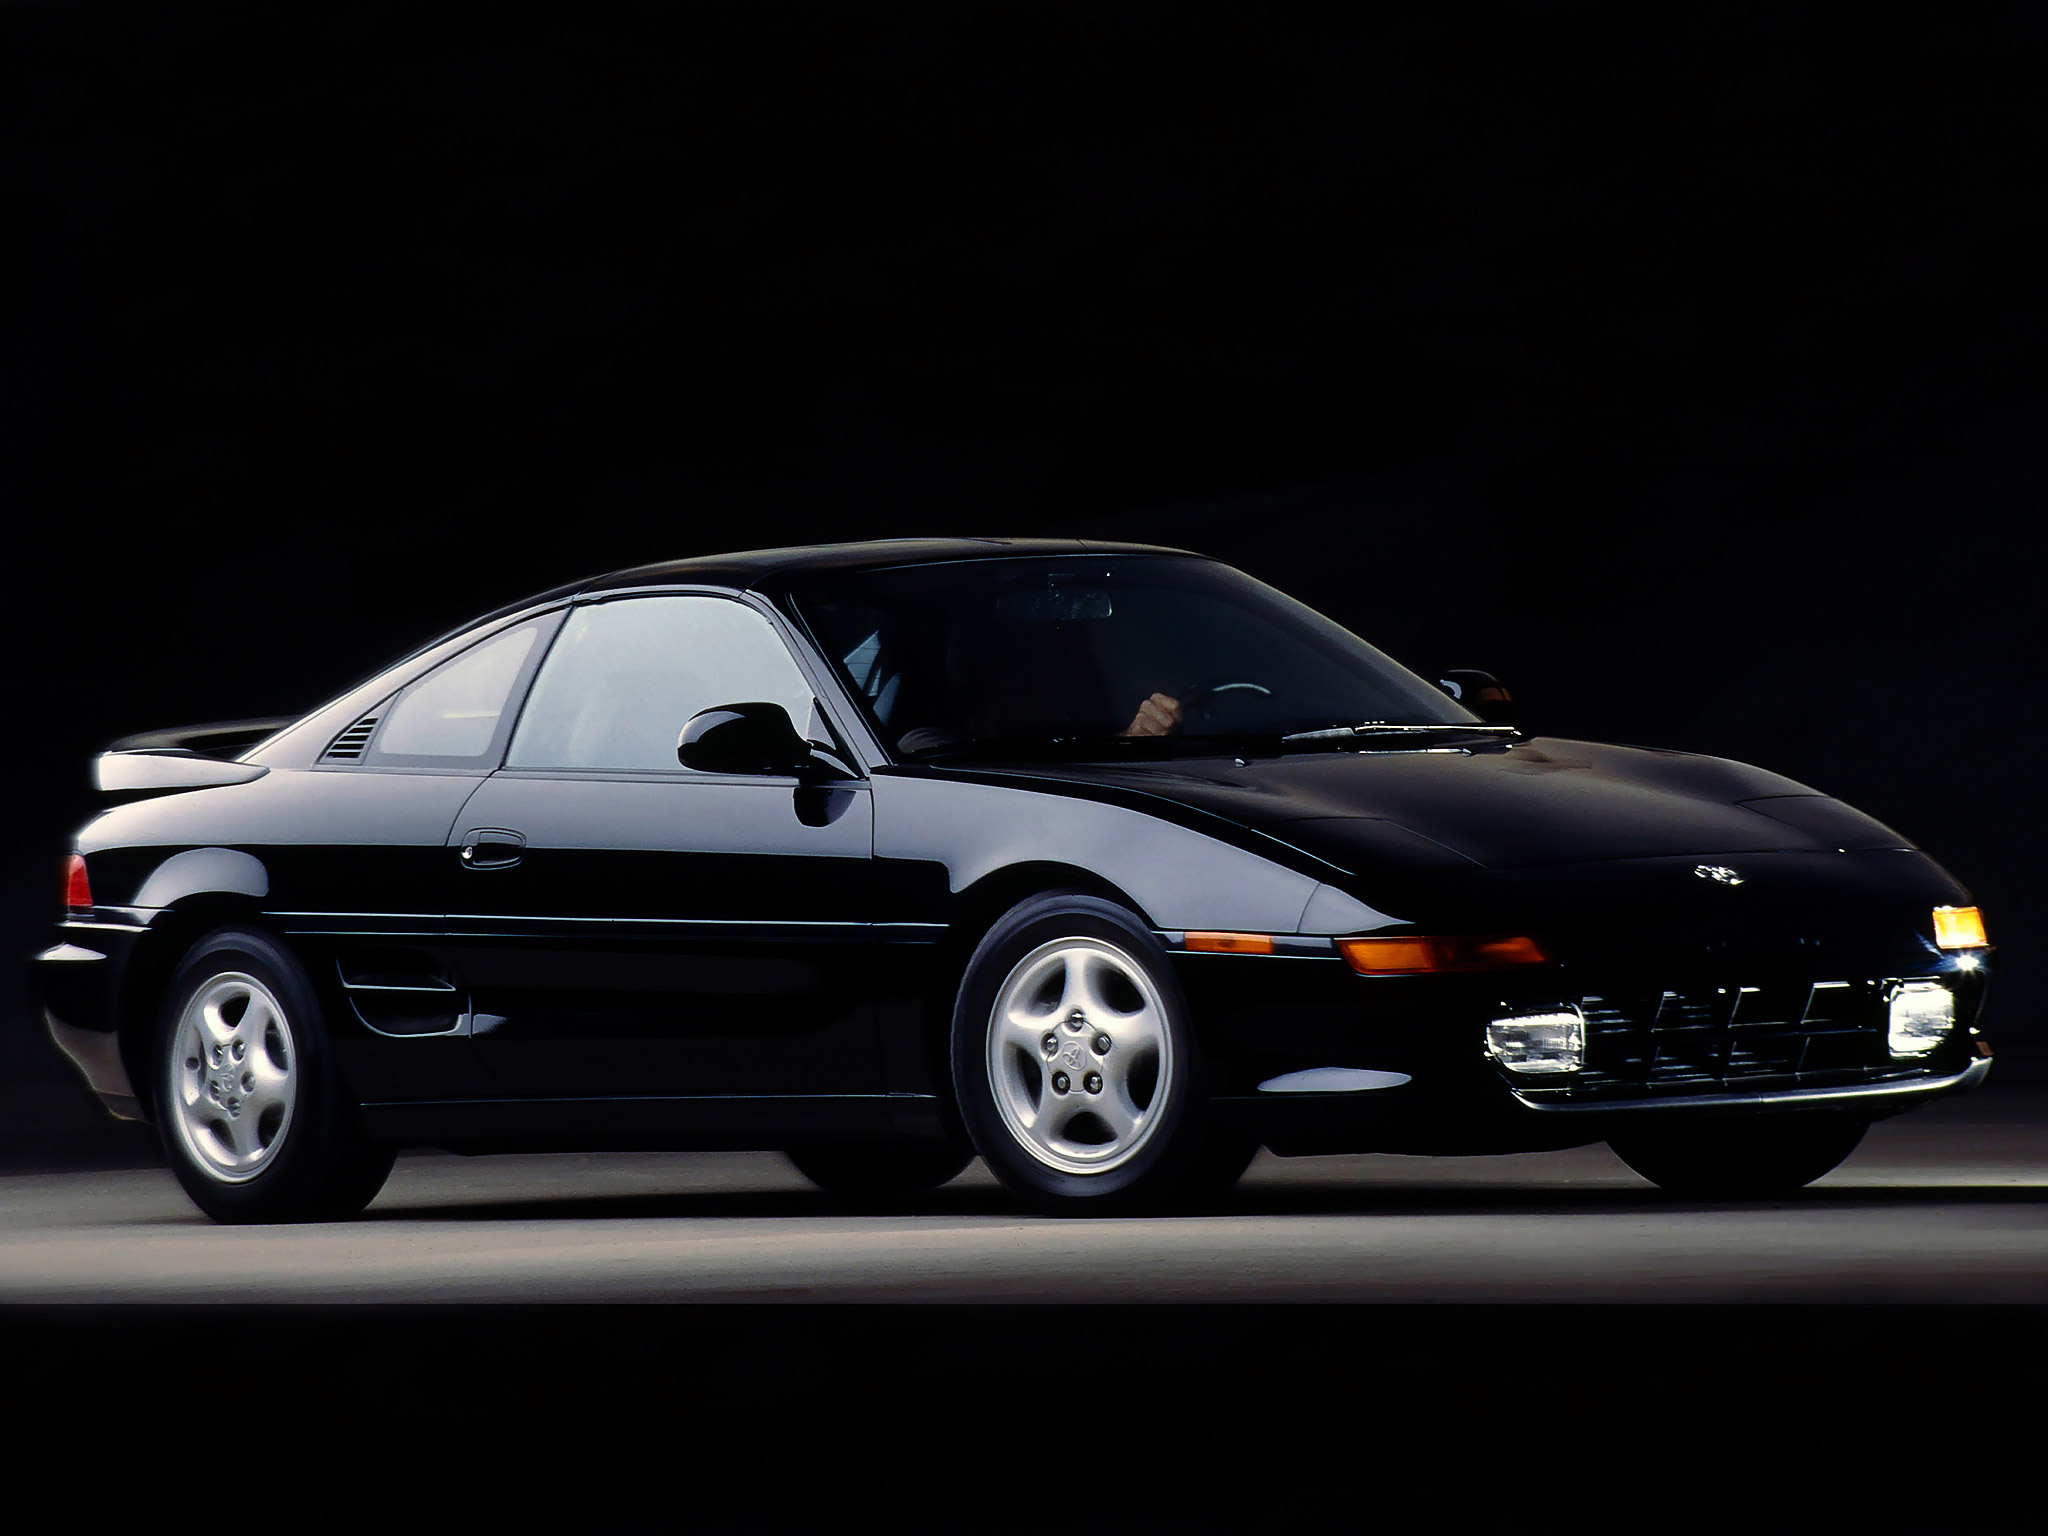  1993 Toyota MR2 Wallpaper.